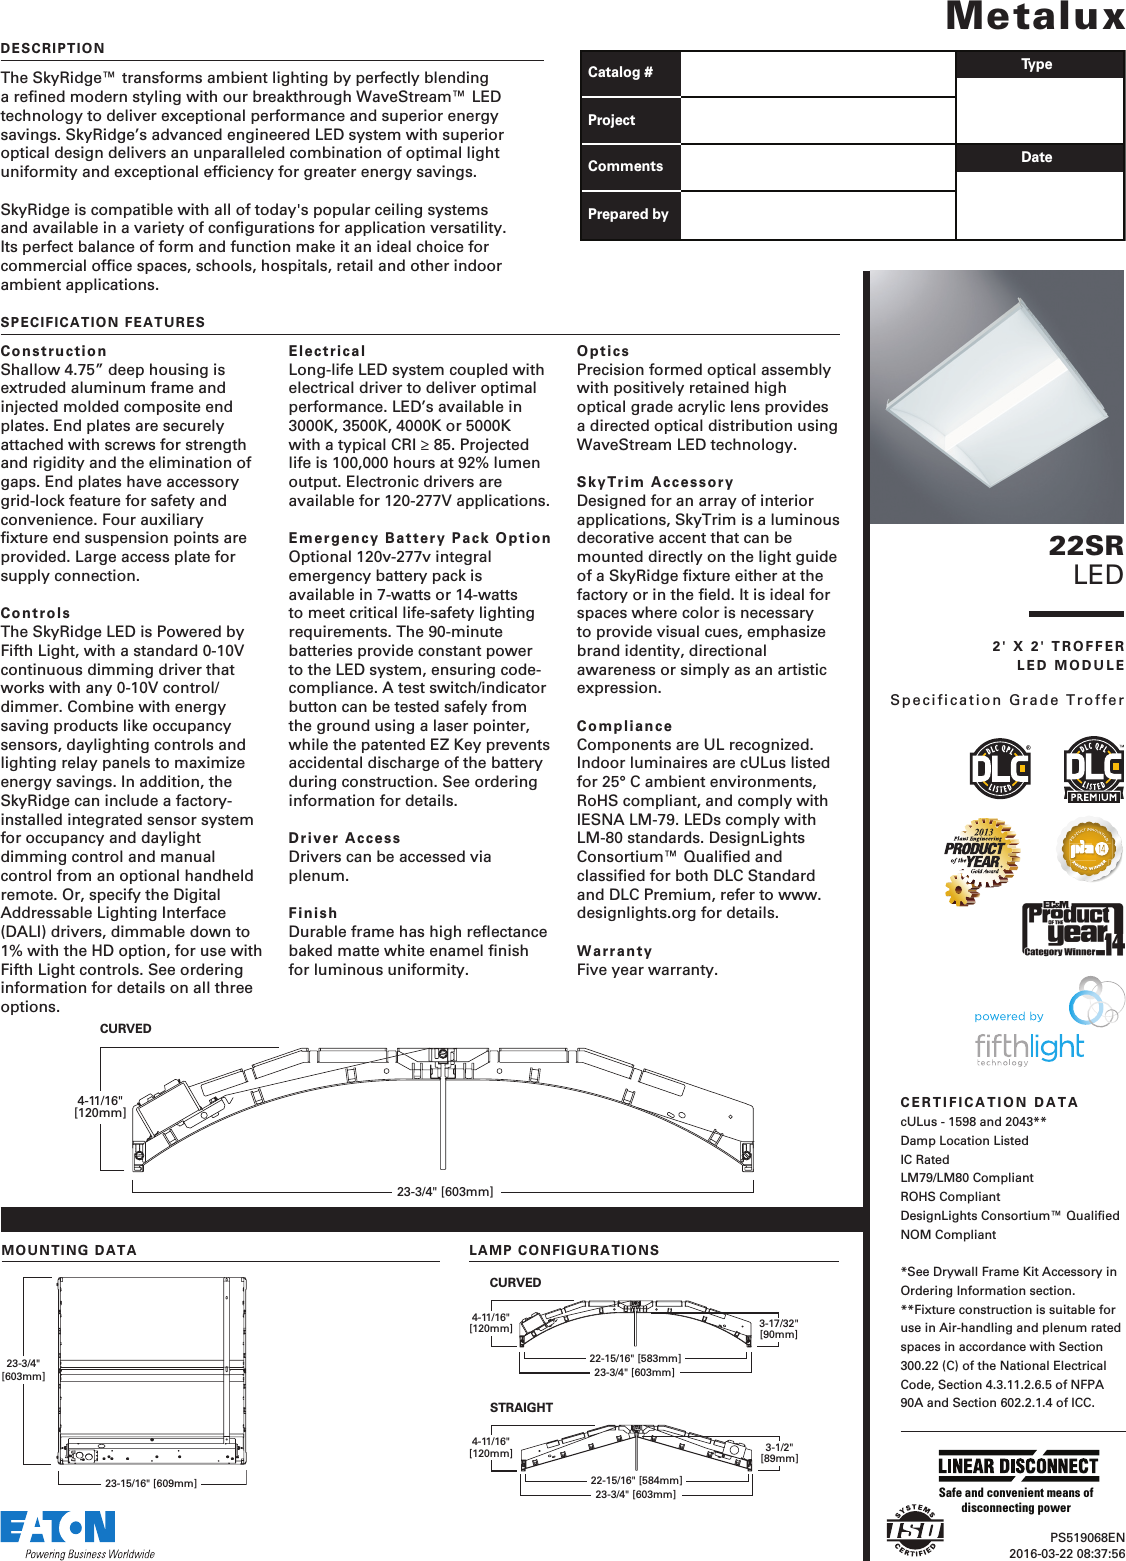 Page 1 of 5 - Metalux SkyRidge 22SR 2' X Specification Grade LED Troffer Spec Sheet